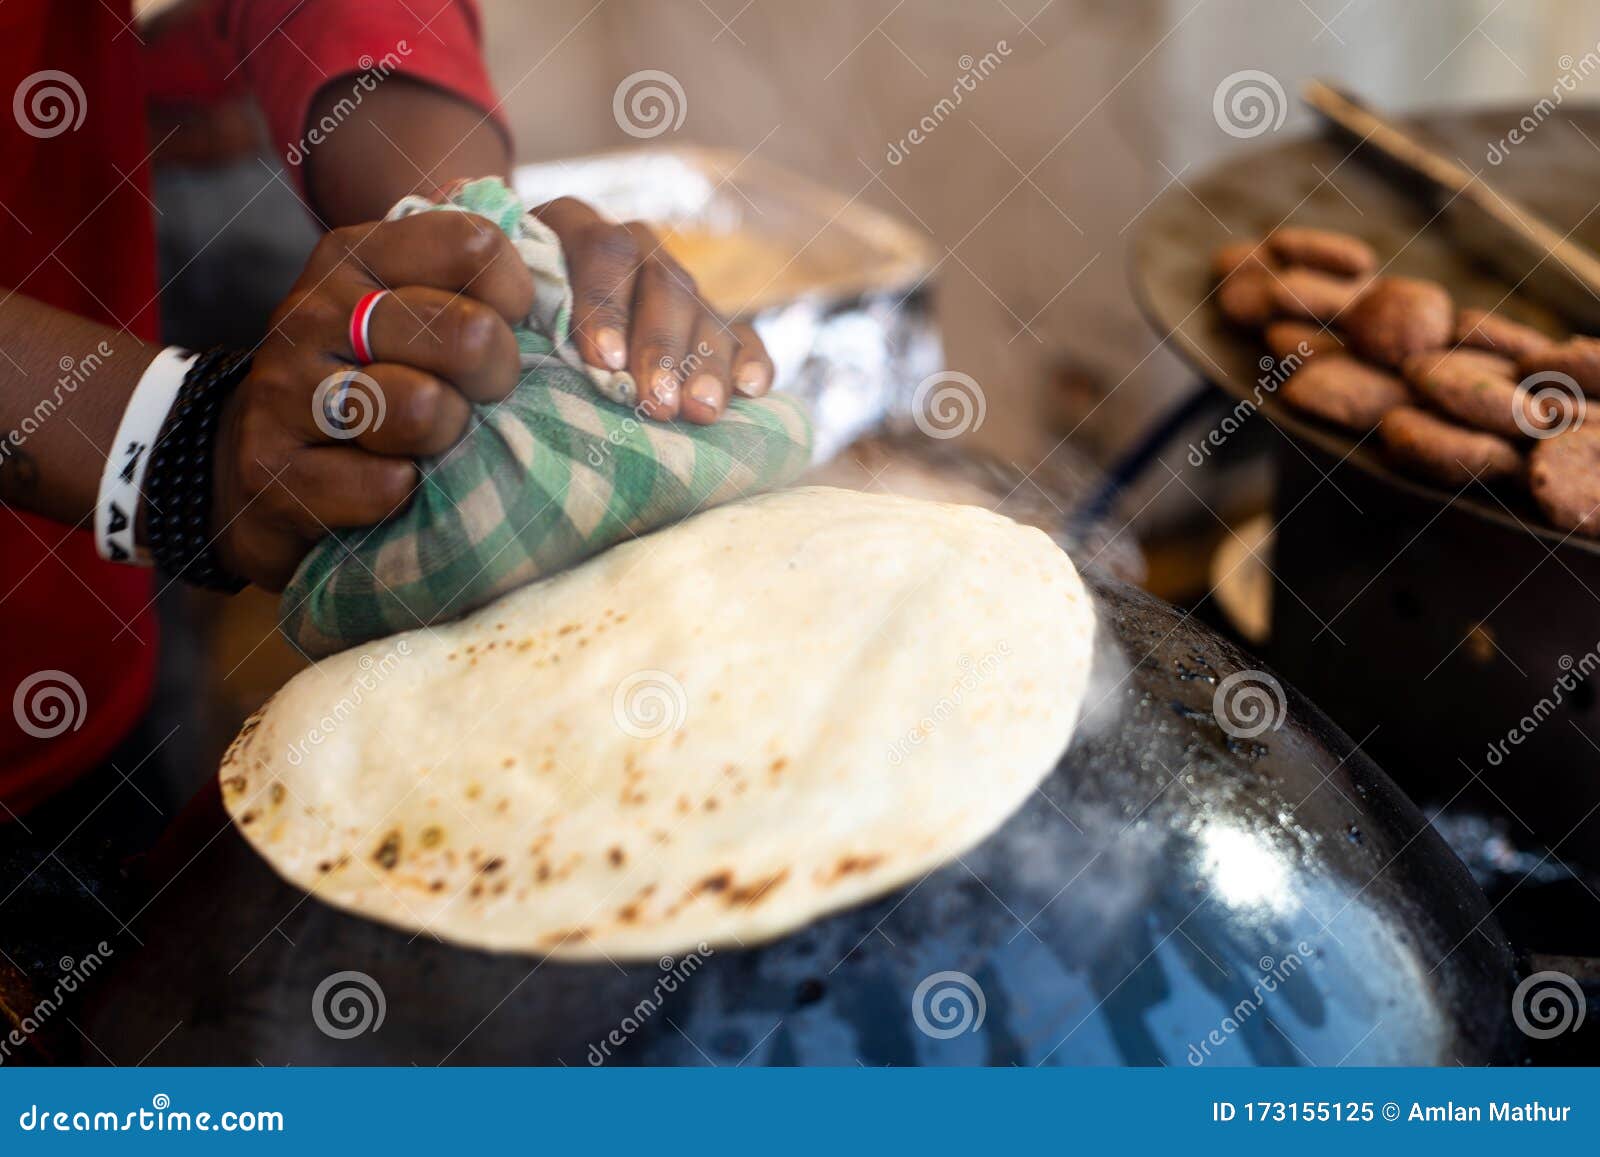 https://thumbs.dreamstime.com/z/man-making-ulta-tawa-paratha-bread-upturned-pot-mughal-cuisine-india-pakistan-flat-cooked-covered-oil-173155125.jpg